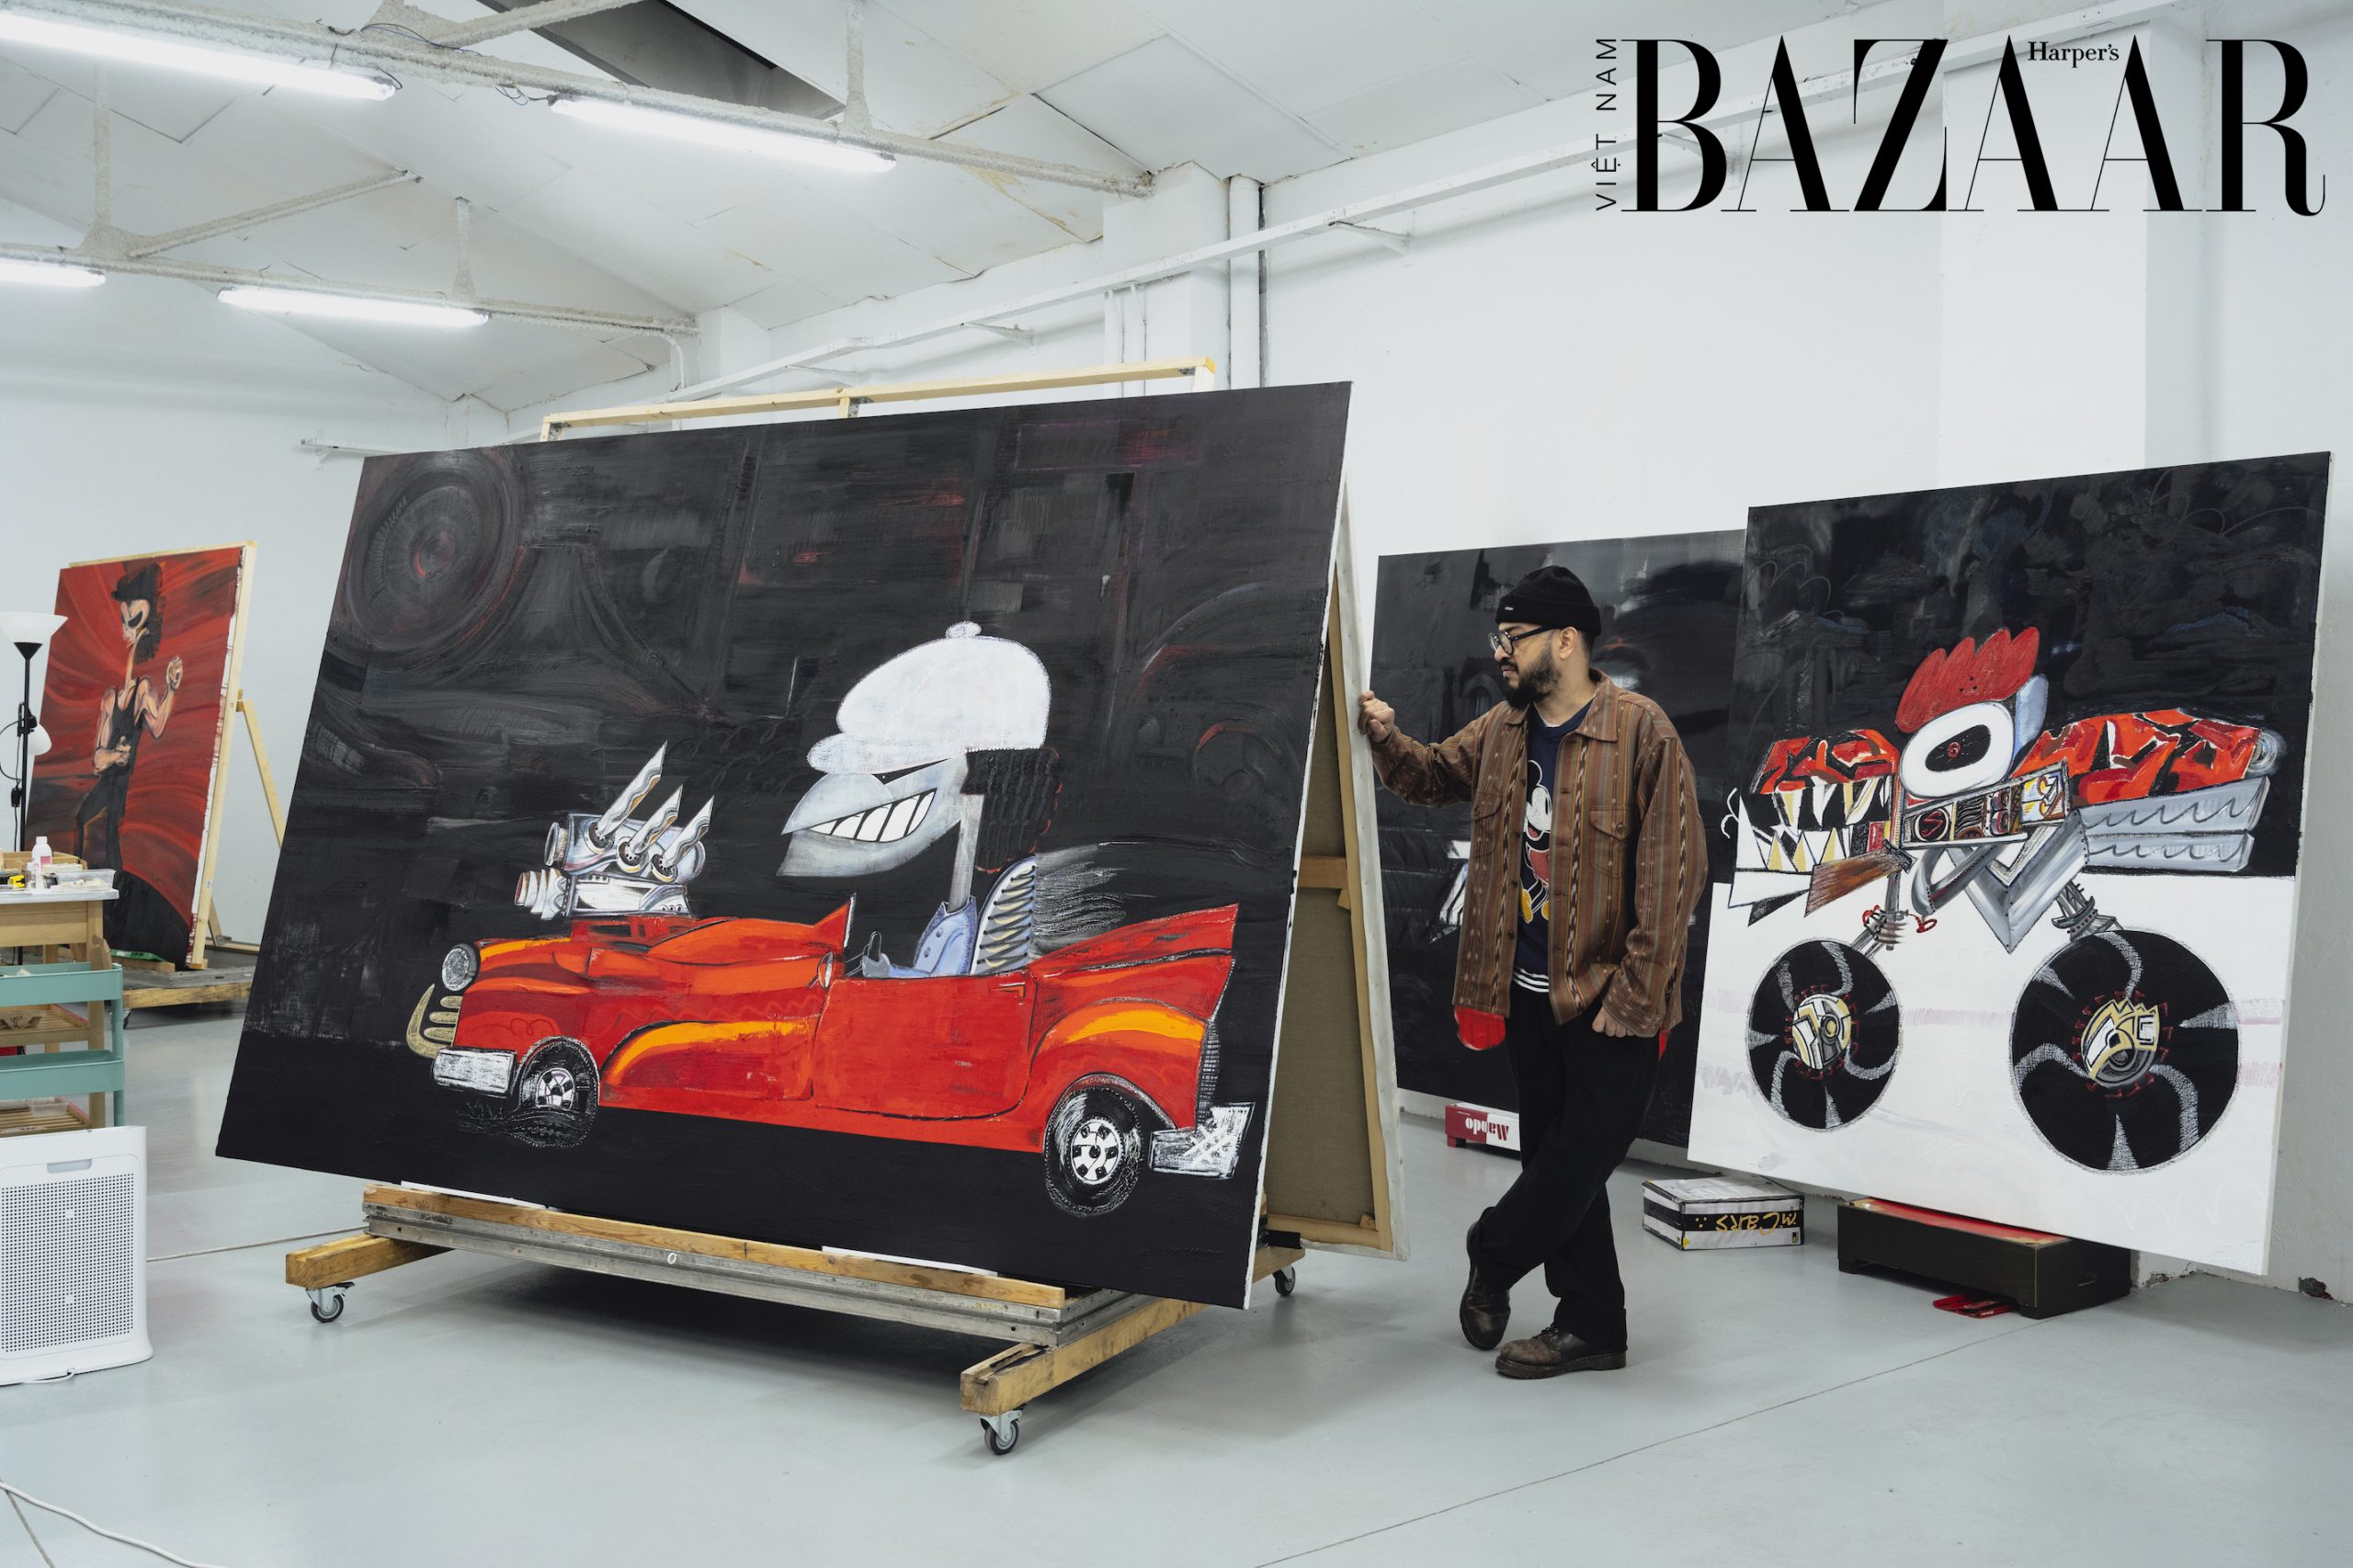 Harper's Bazaar_Triển lãm Abdul Vas Rock n Roll Raiders tại Madrid_8